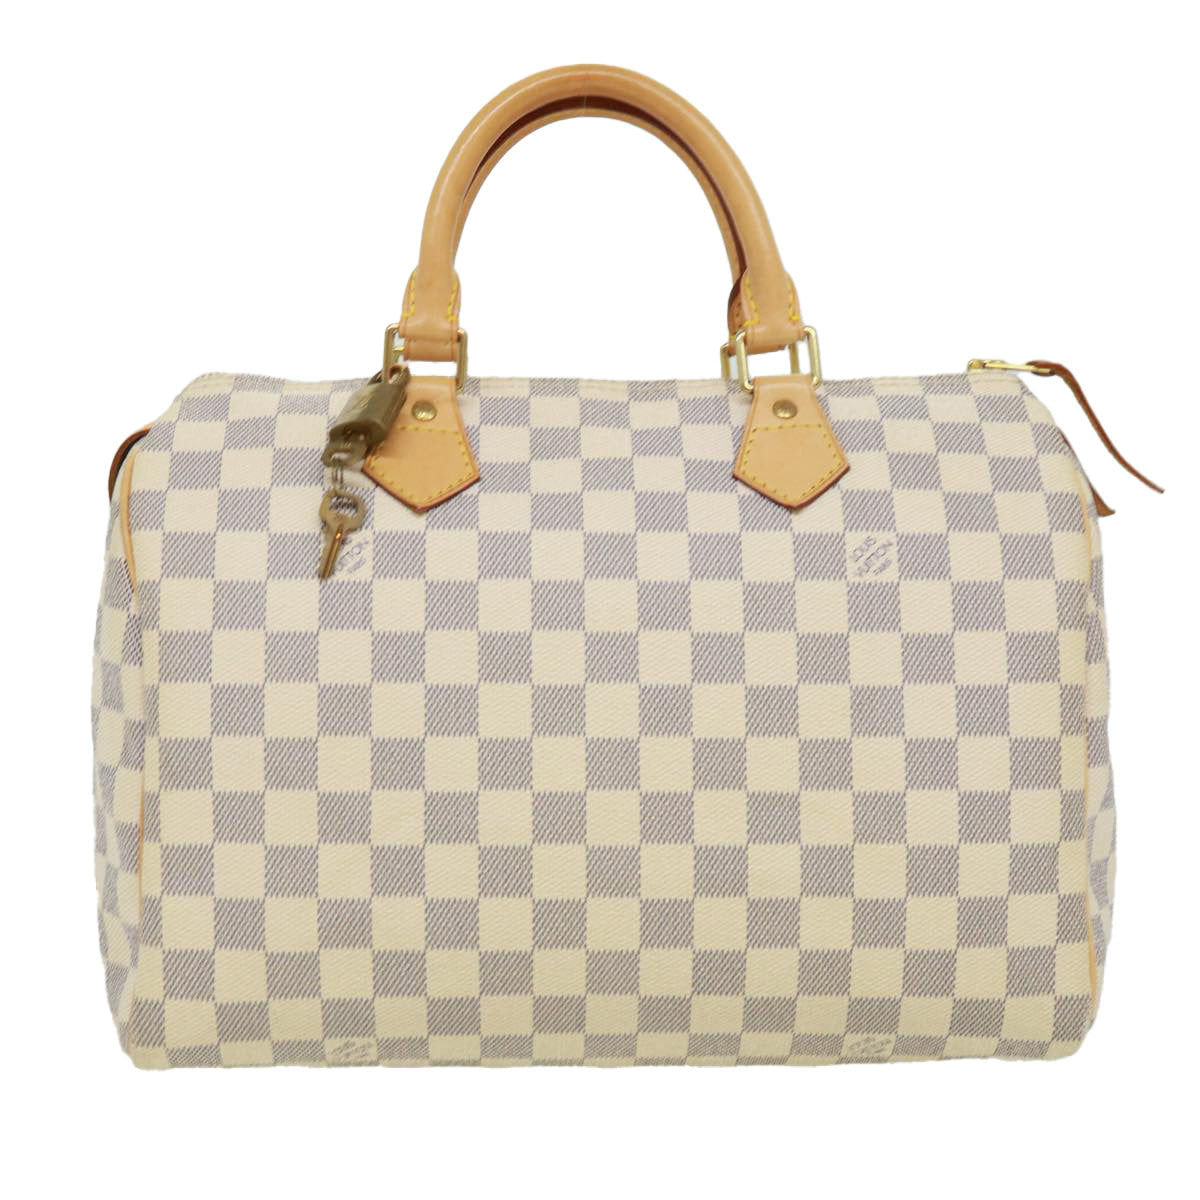 Louis Vuitton checkerboard pattern SVG Free